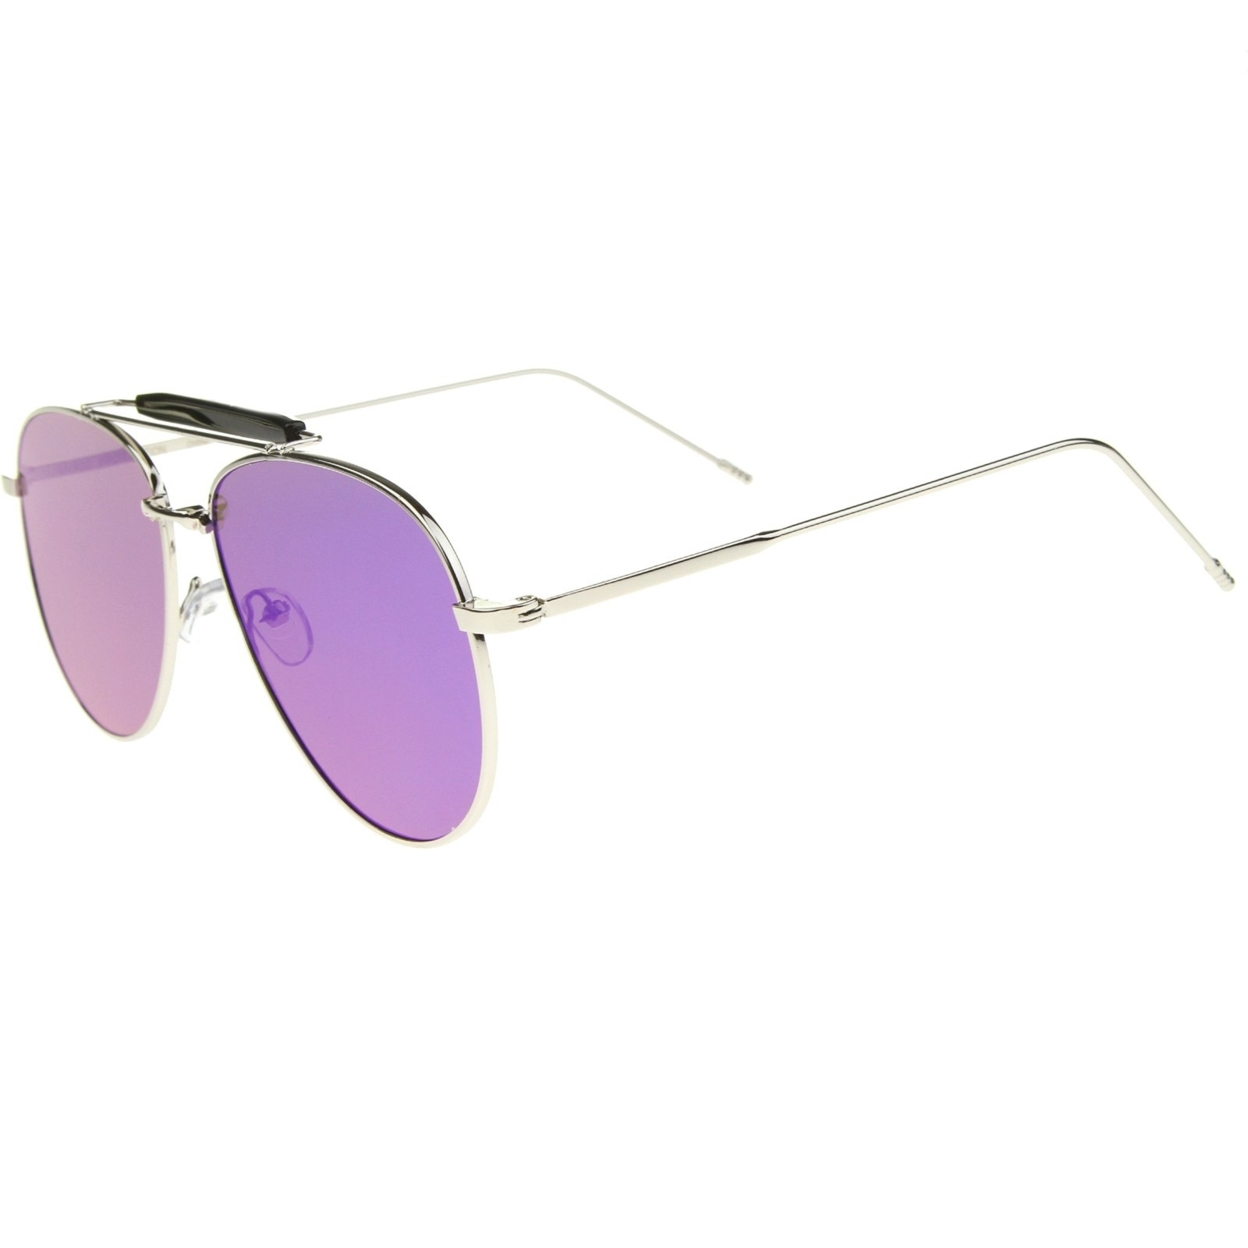 Large Classic Teardrop Crossbar Mirrored Flat Lens Aviator Sunglasses 56mm - Silver-Black / Green Mirror